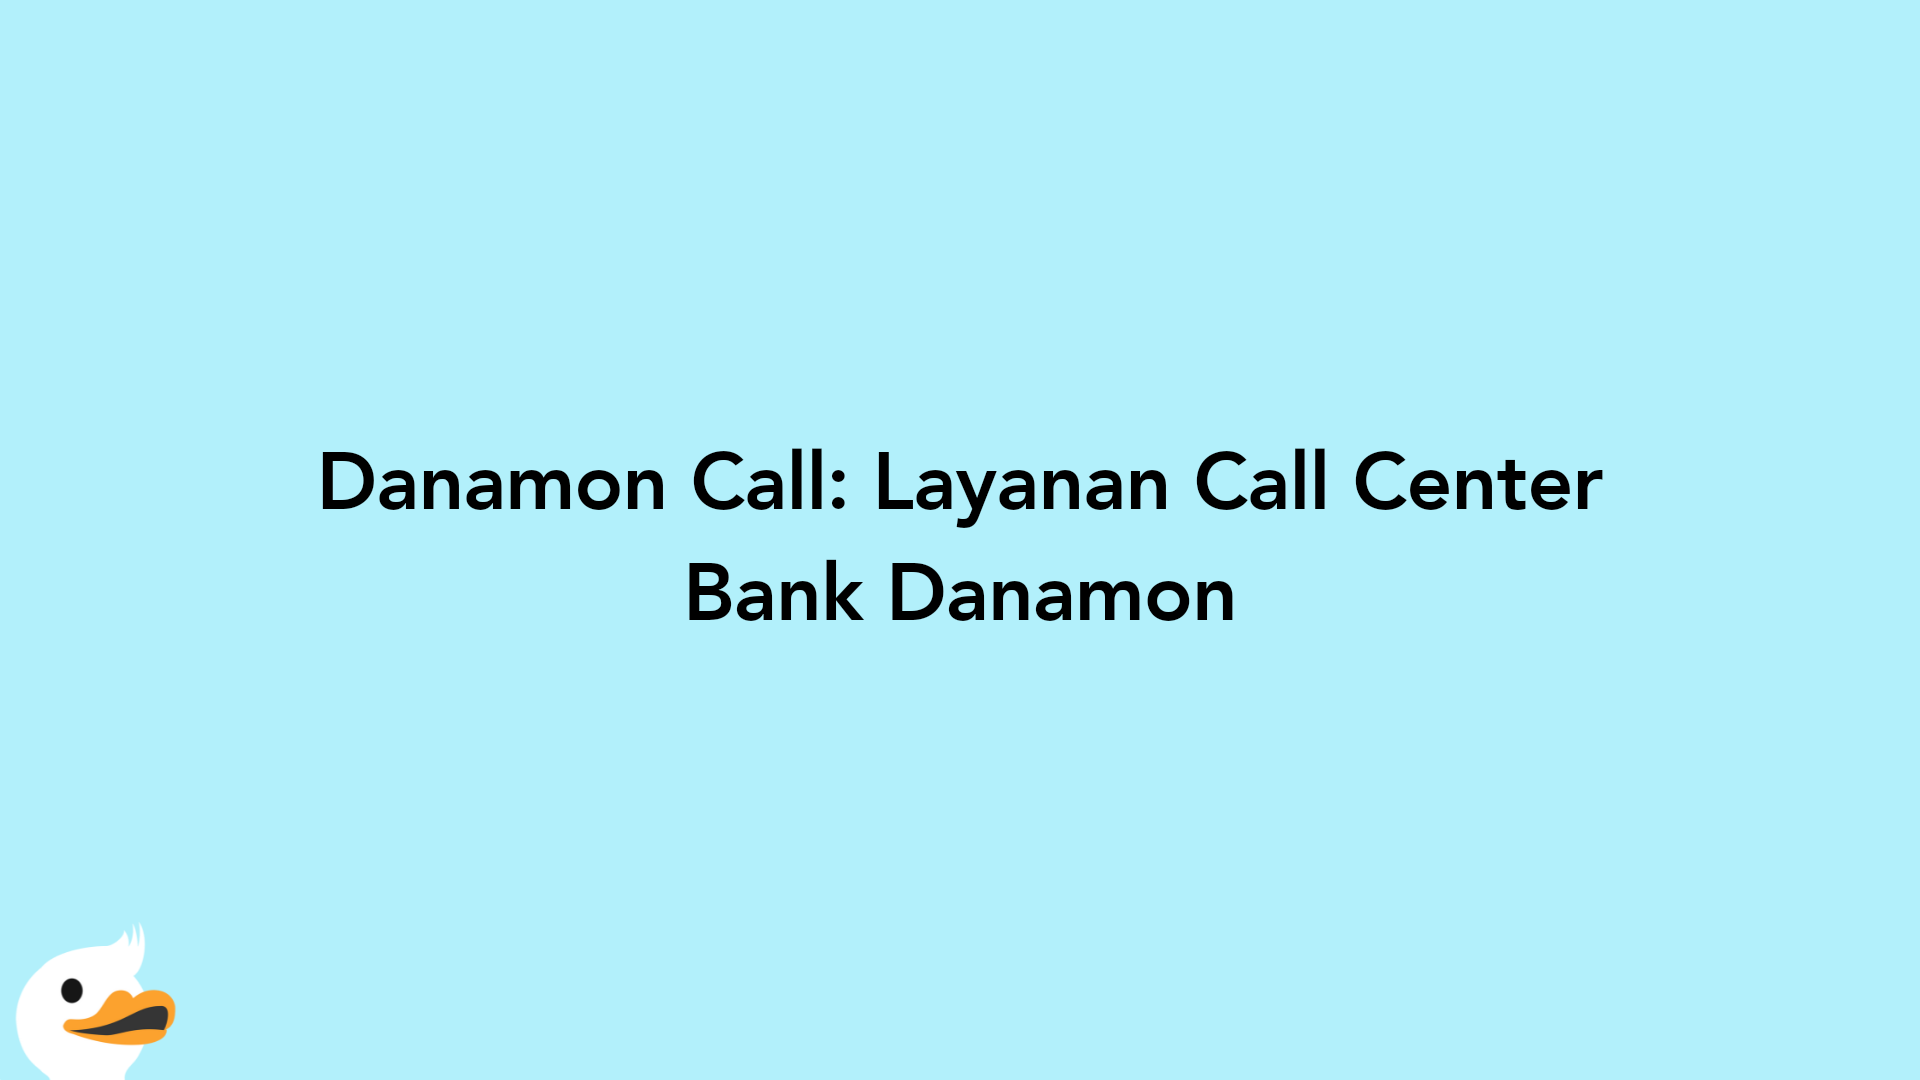 Danamon Call: Layanan Call Center Bank Danamon